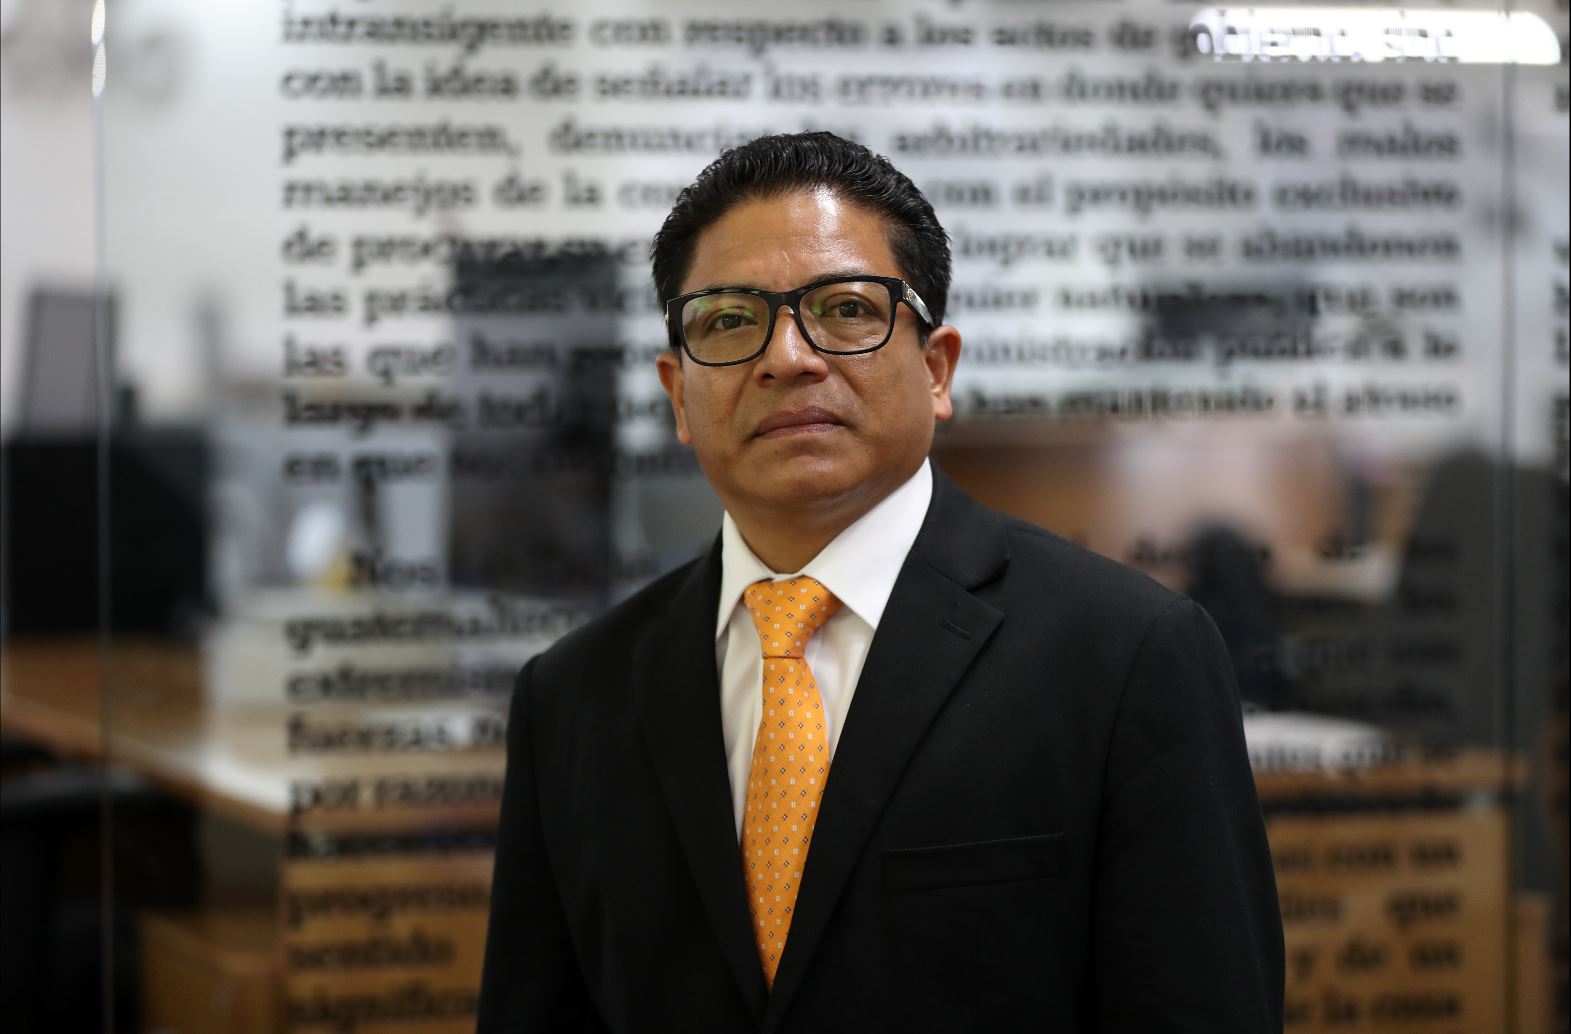 Walter Brenner Vásquez Gómez busca ser electo fiscal general de Guatemala. (Foto Prensa Libre: María Reneé Barrientos)